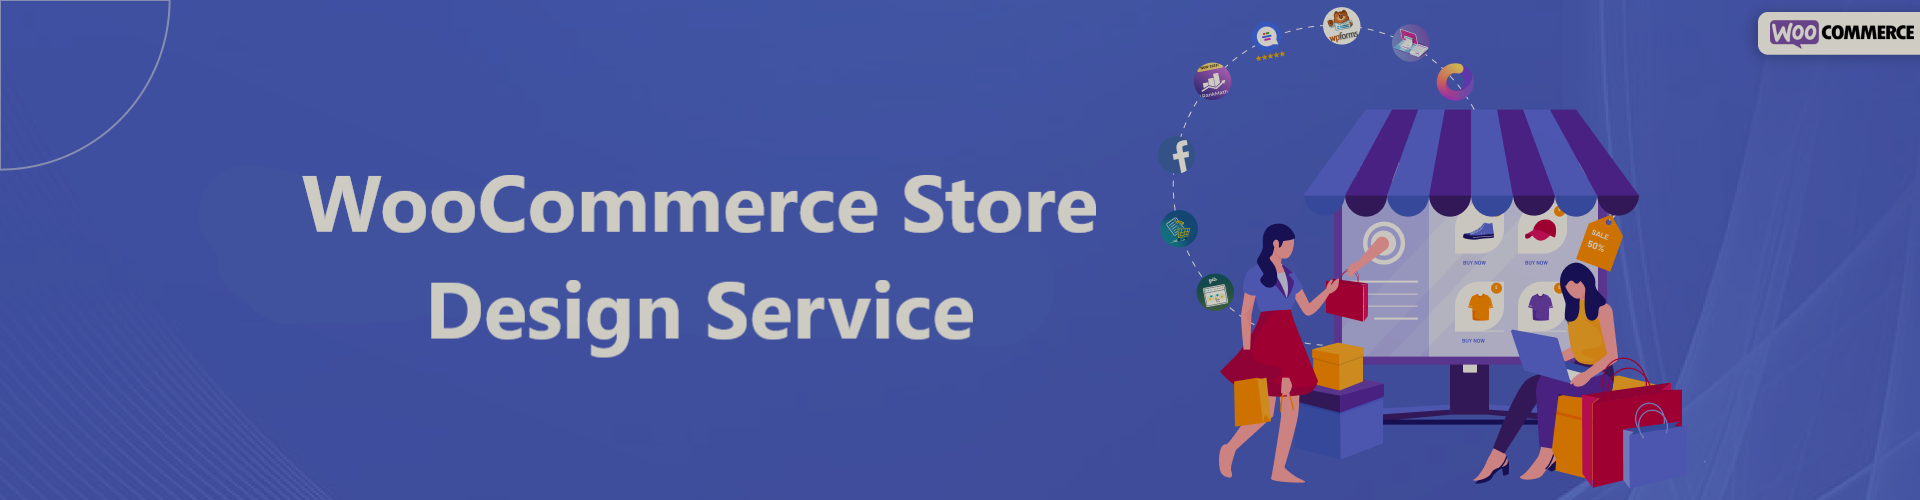 WooCommerce Store Design Service